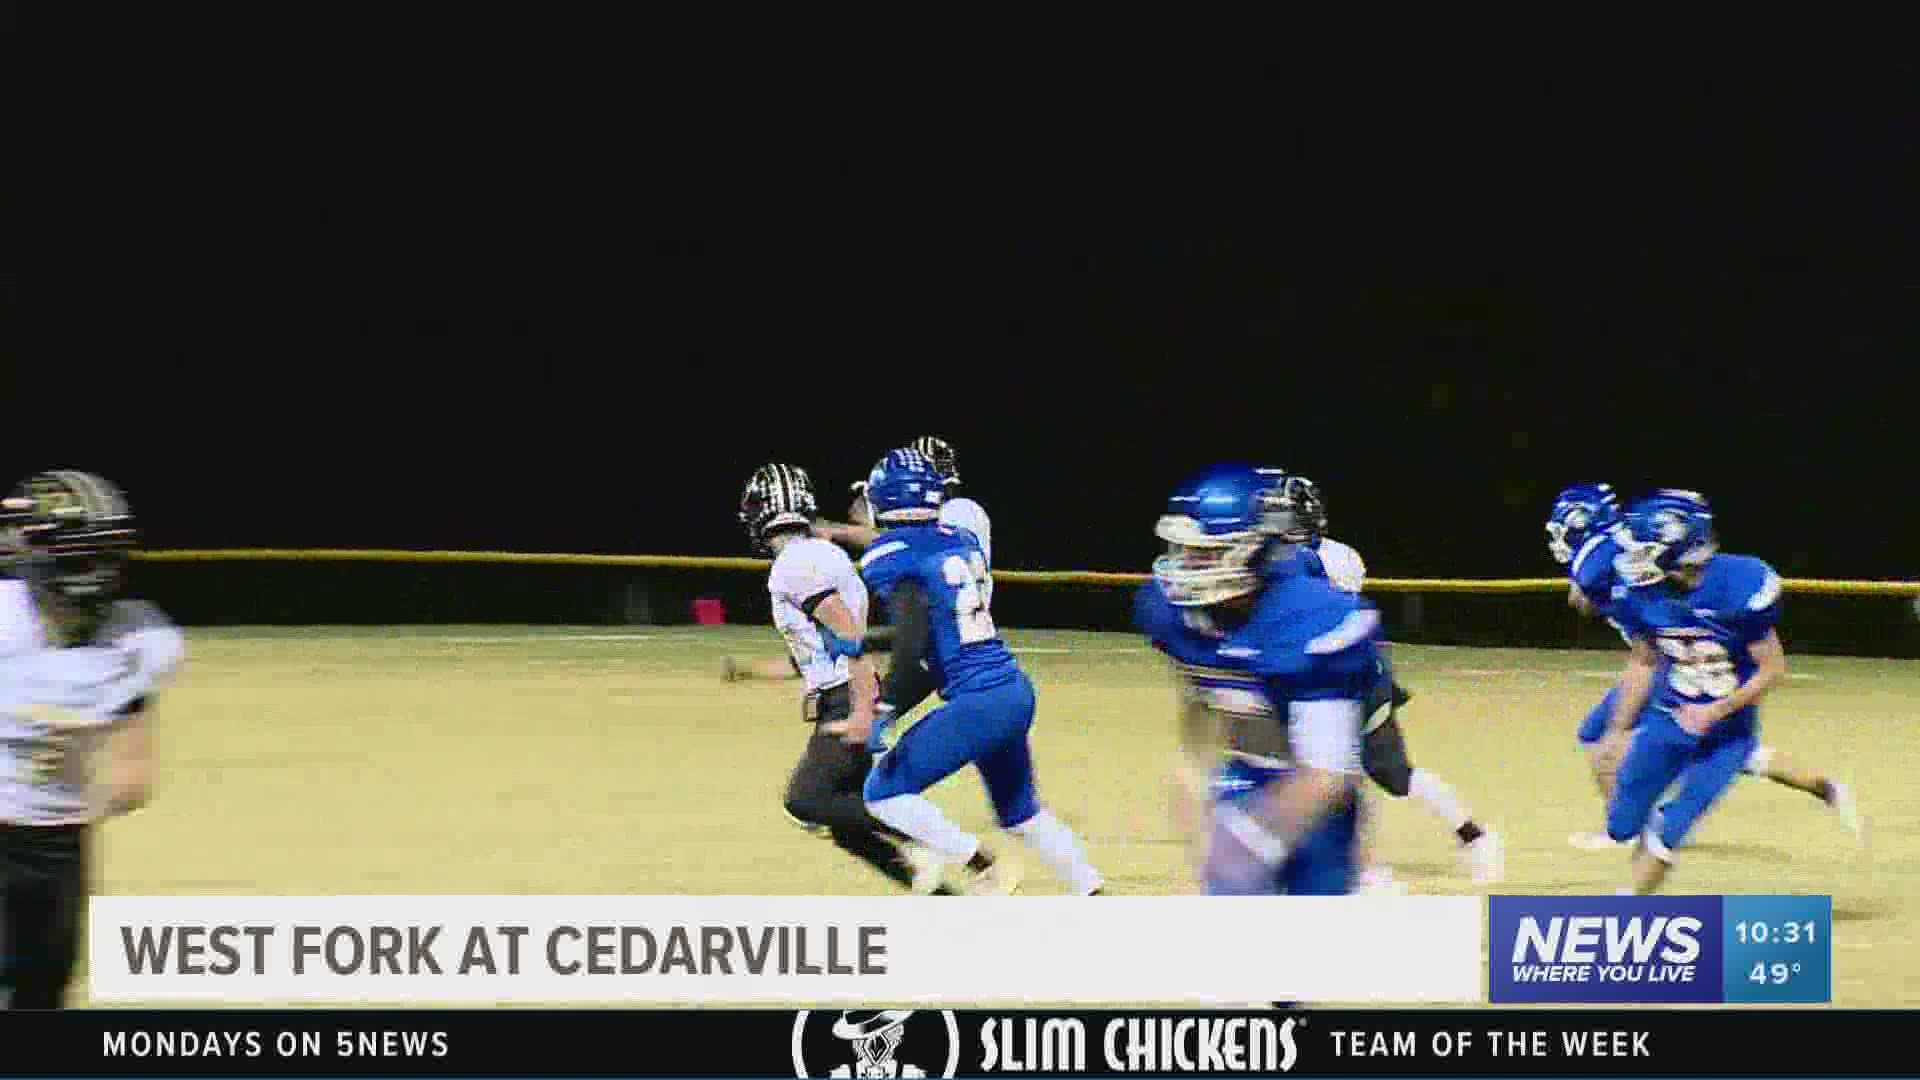 Cedarville beat West Fork (48-41).